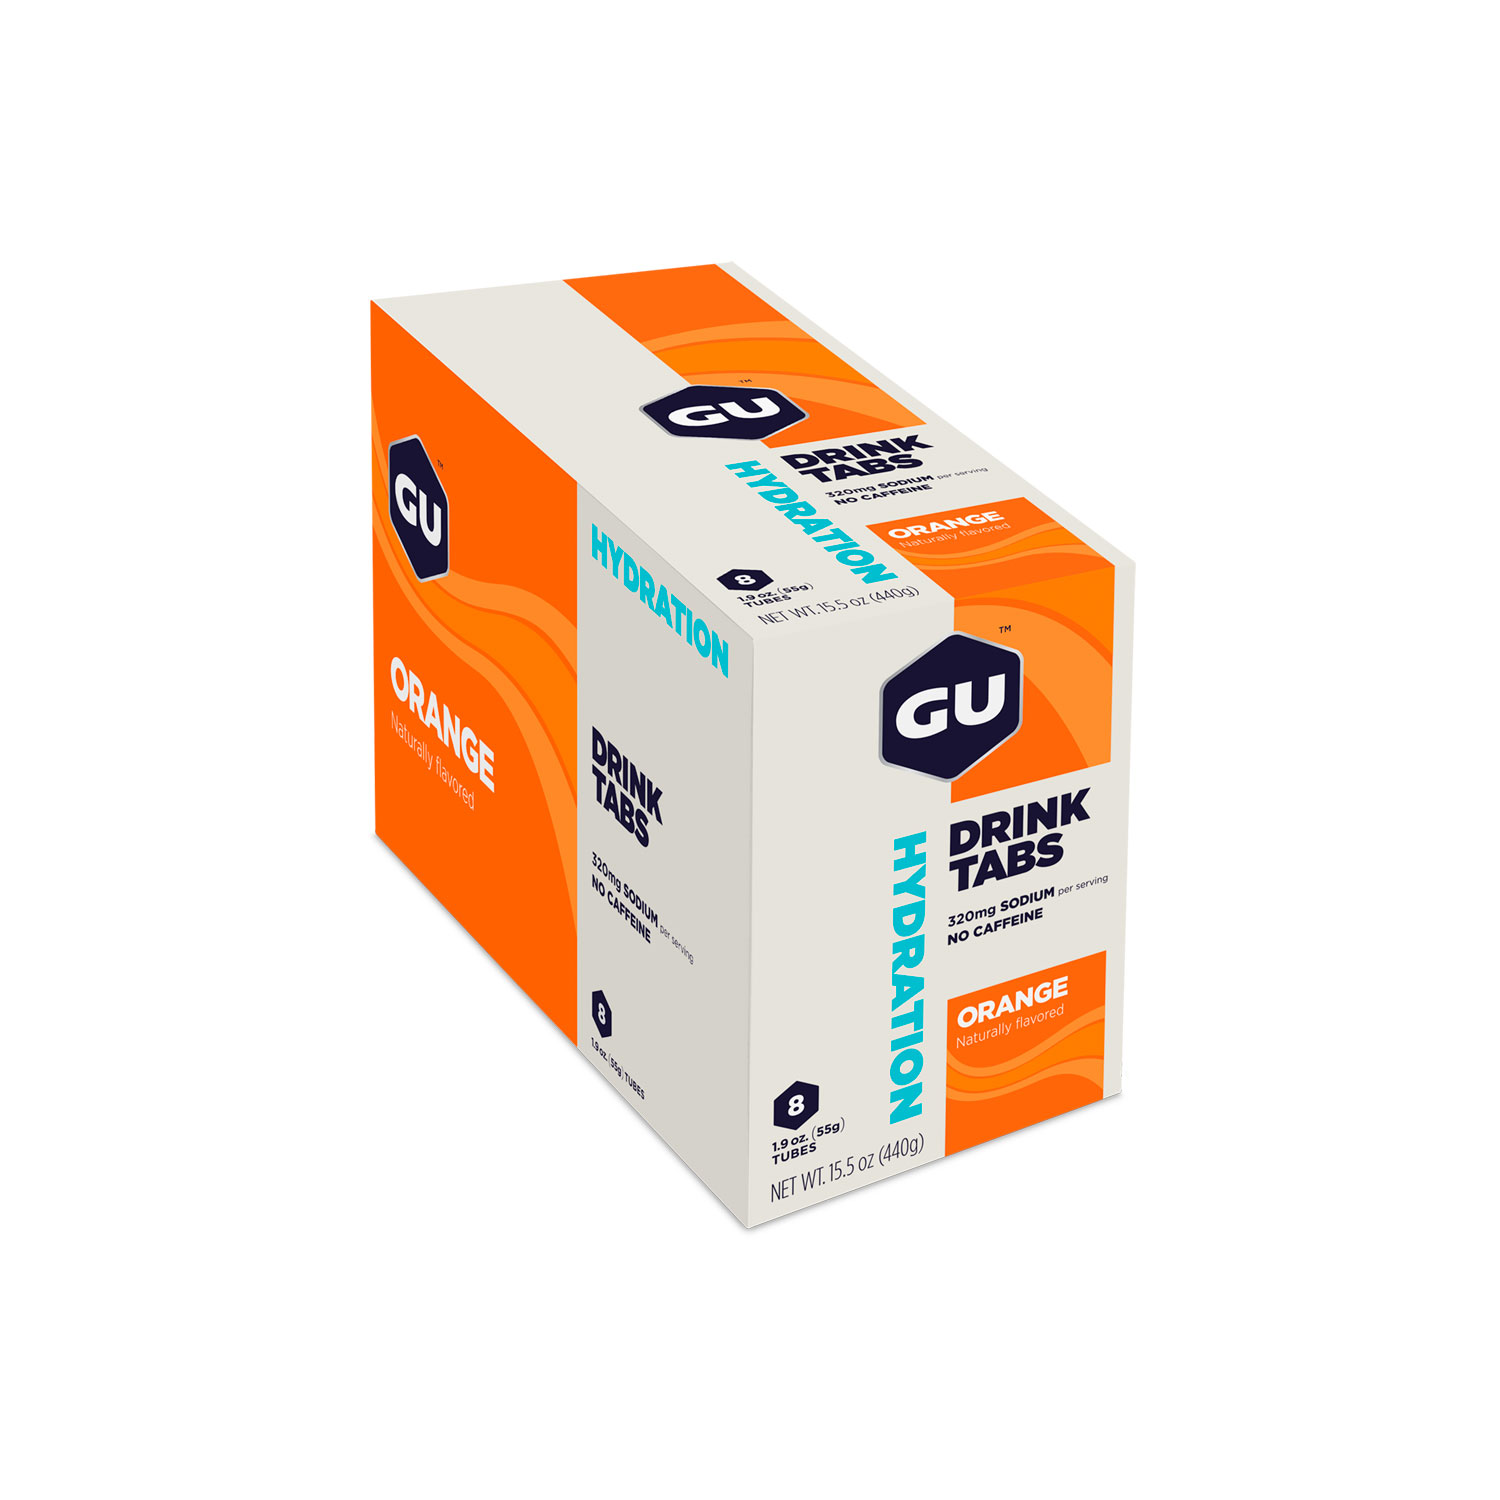 Tabs-de-hidratación-naranja-GU-ENERGY-box